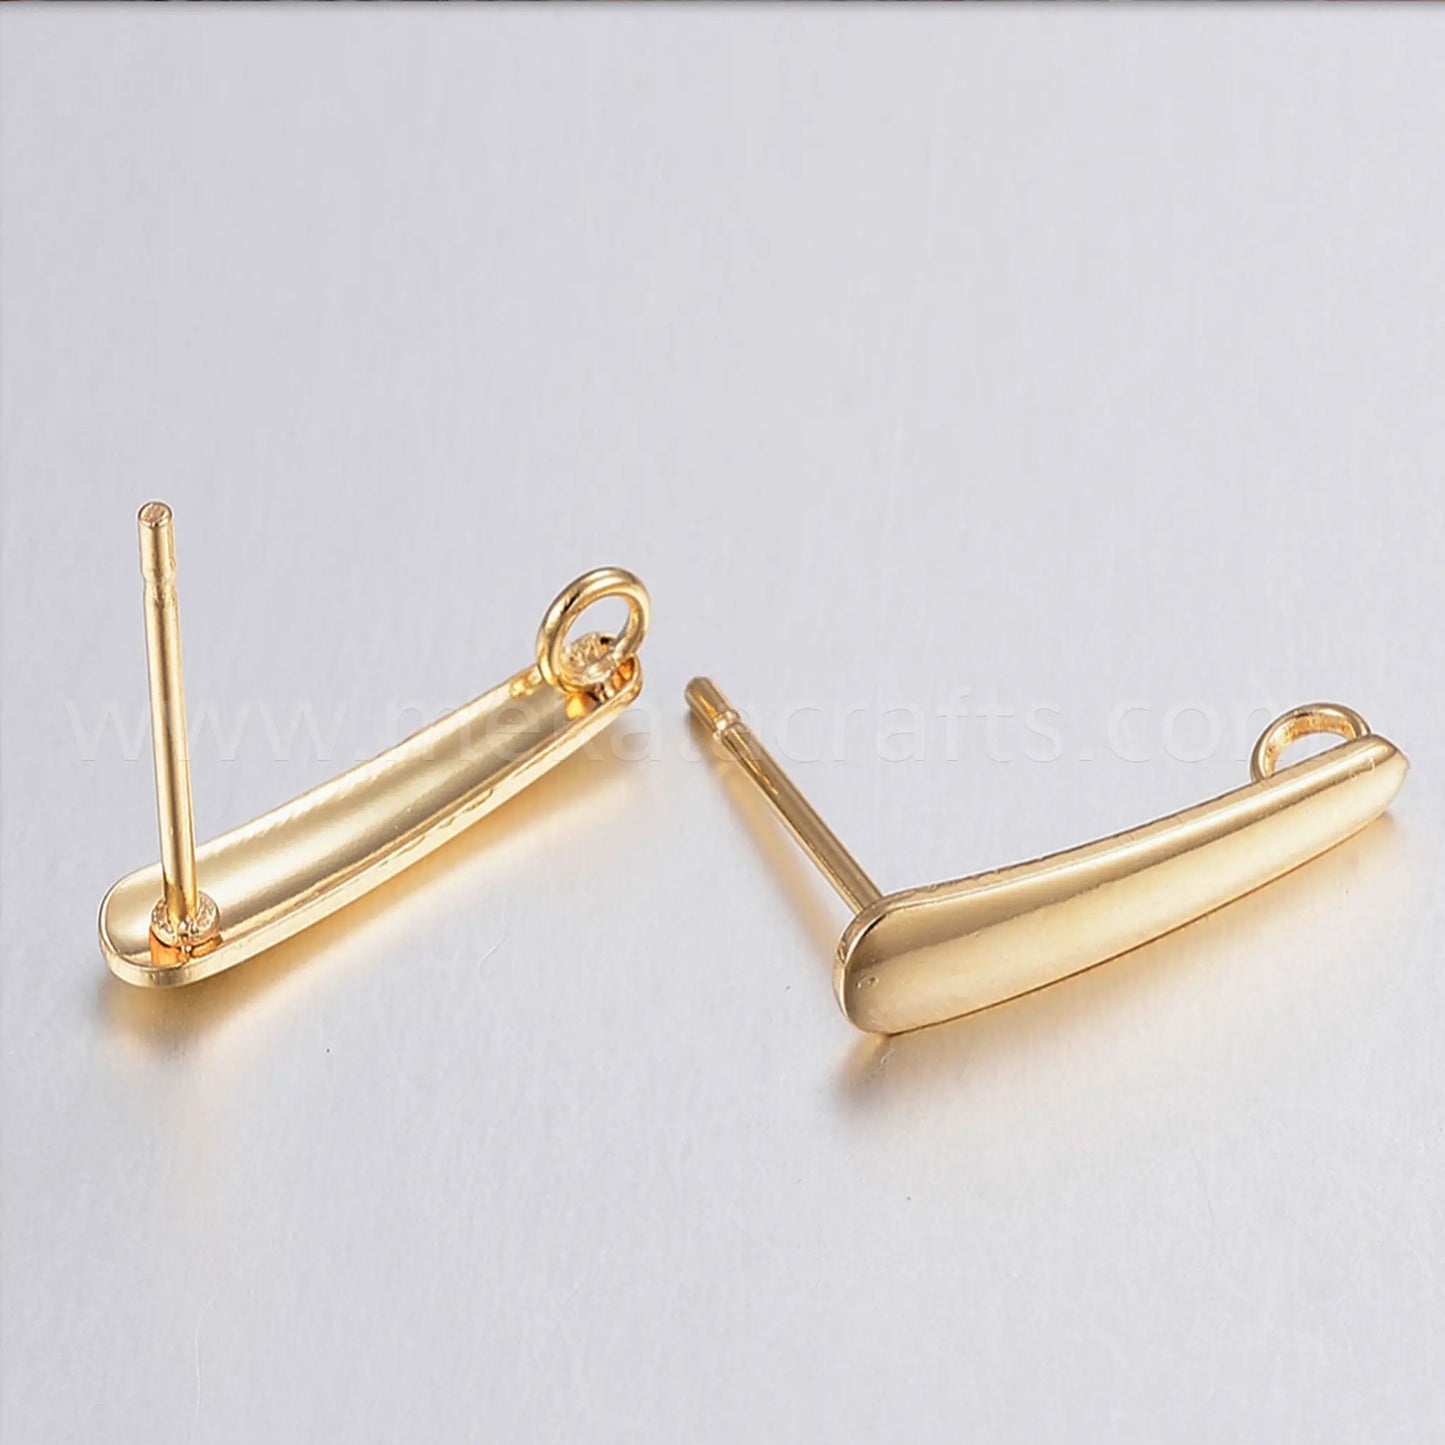 304 Stainless Steel Stud Earring Findings, with Loop, Golden